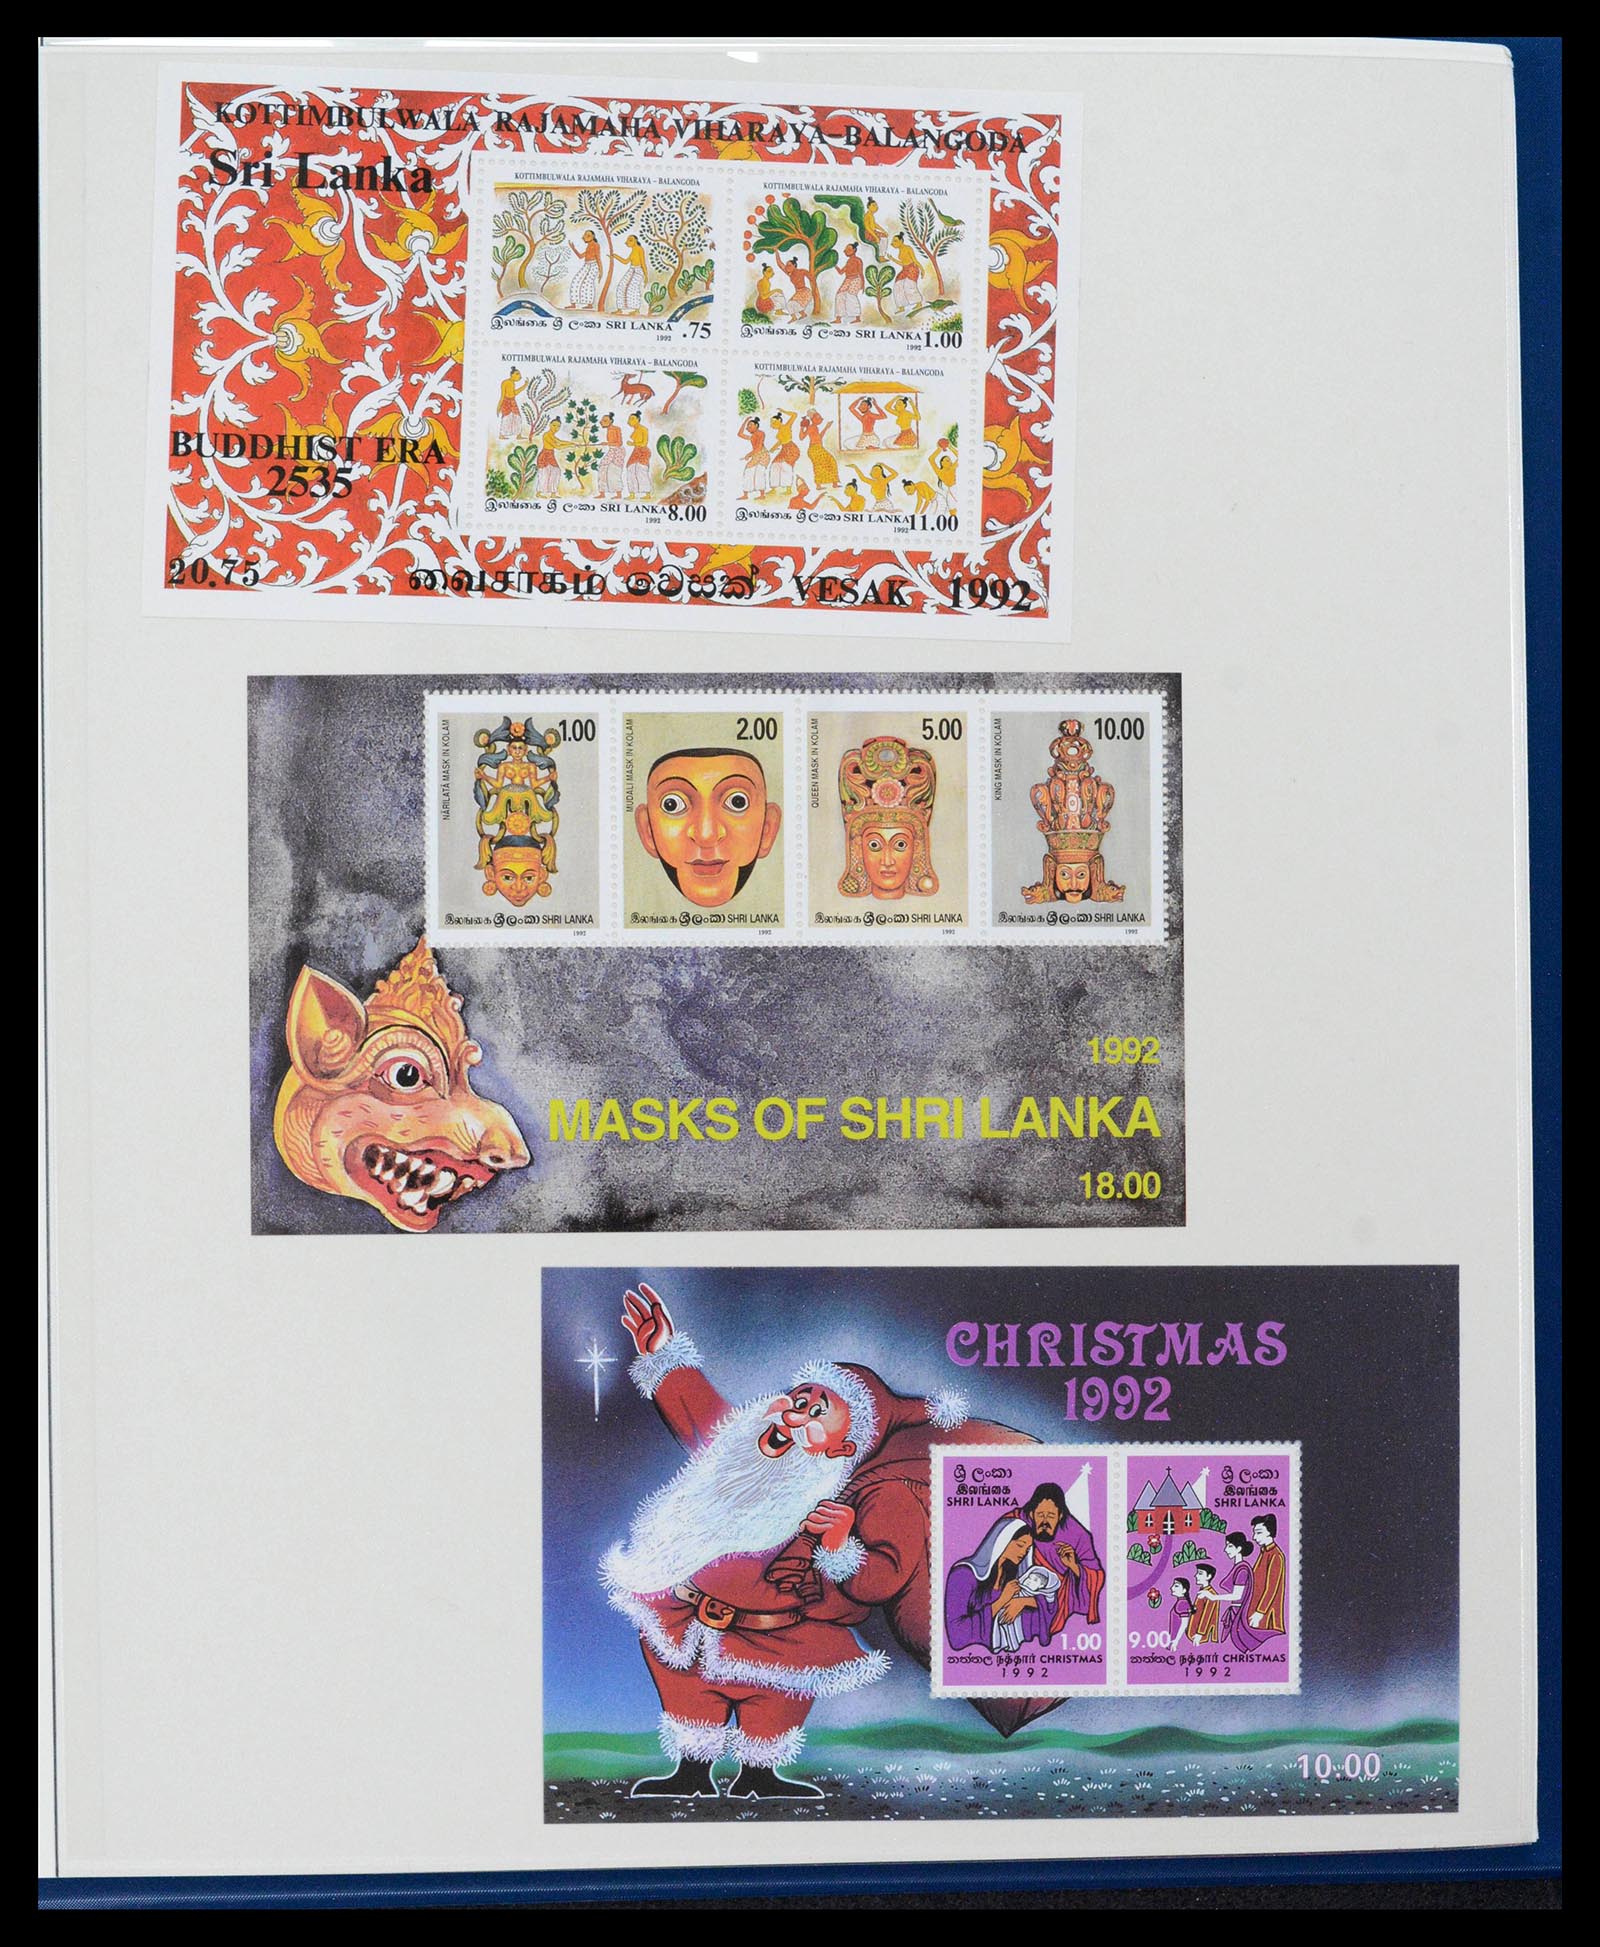 39003 0281 - Stamp collection 39003 Ceylon/Sri Lanka 1857-2003.